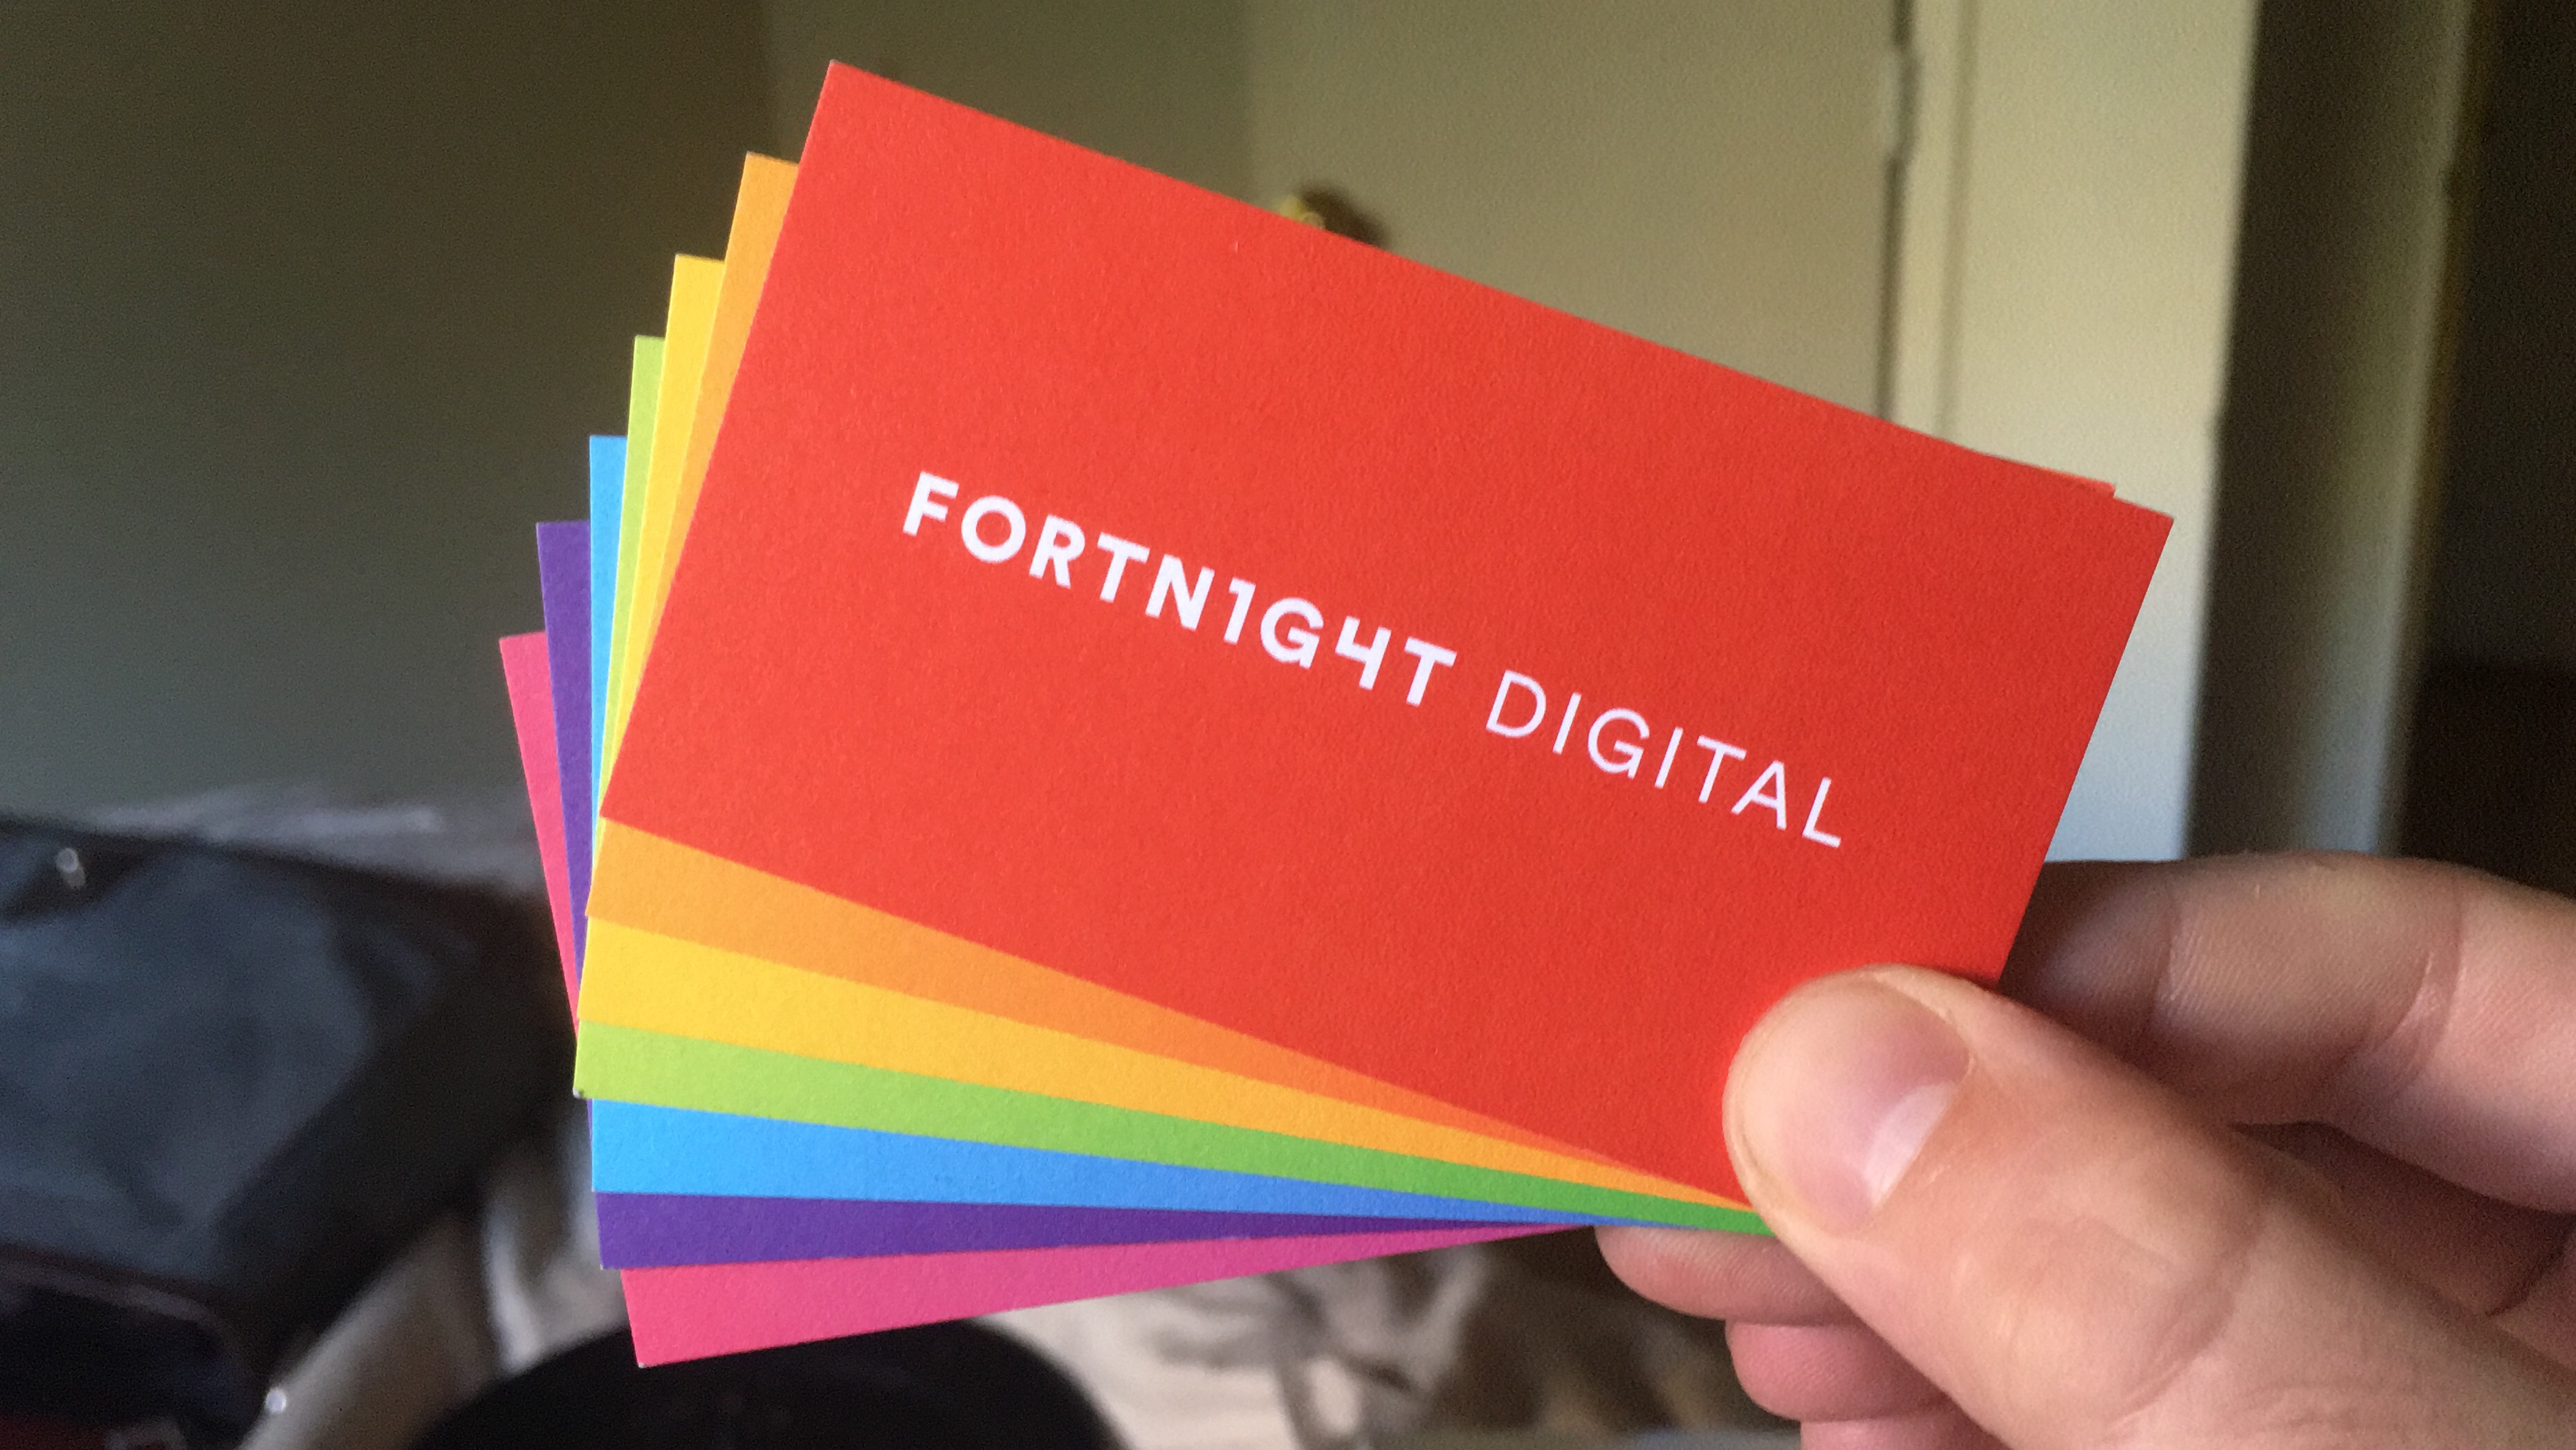 Fortnight Digital Business Cards